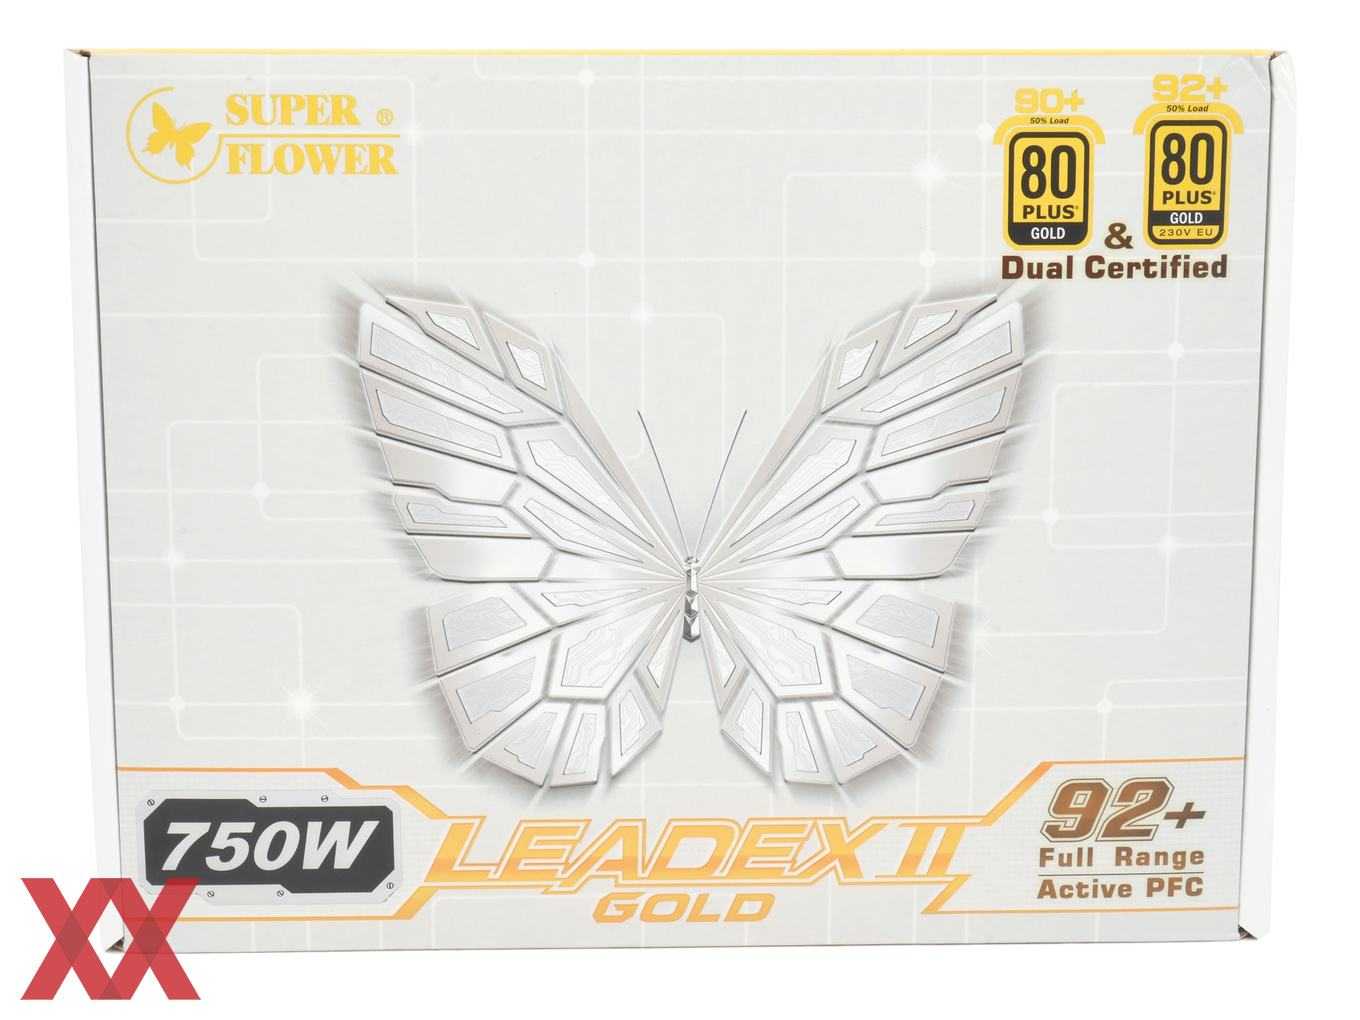 Тест и обзор: super flower leadex ii gold 750w (sf-750f14eg) – качественный блок питания с подсветкой (обновление)